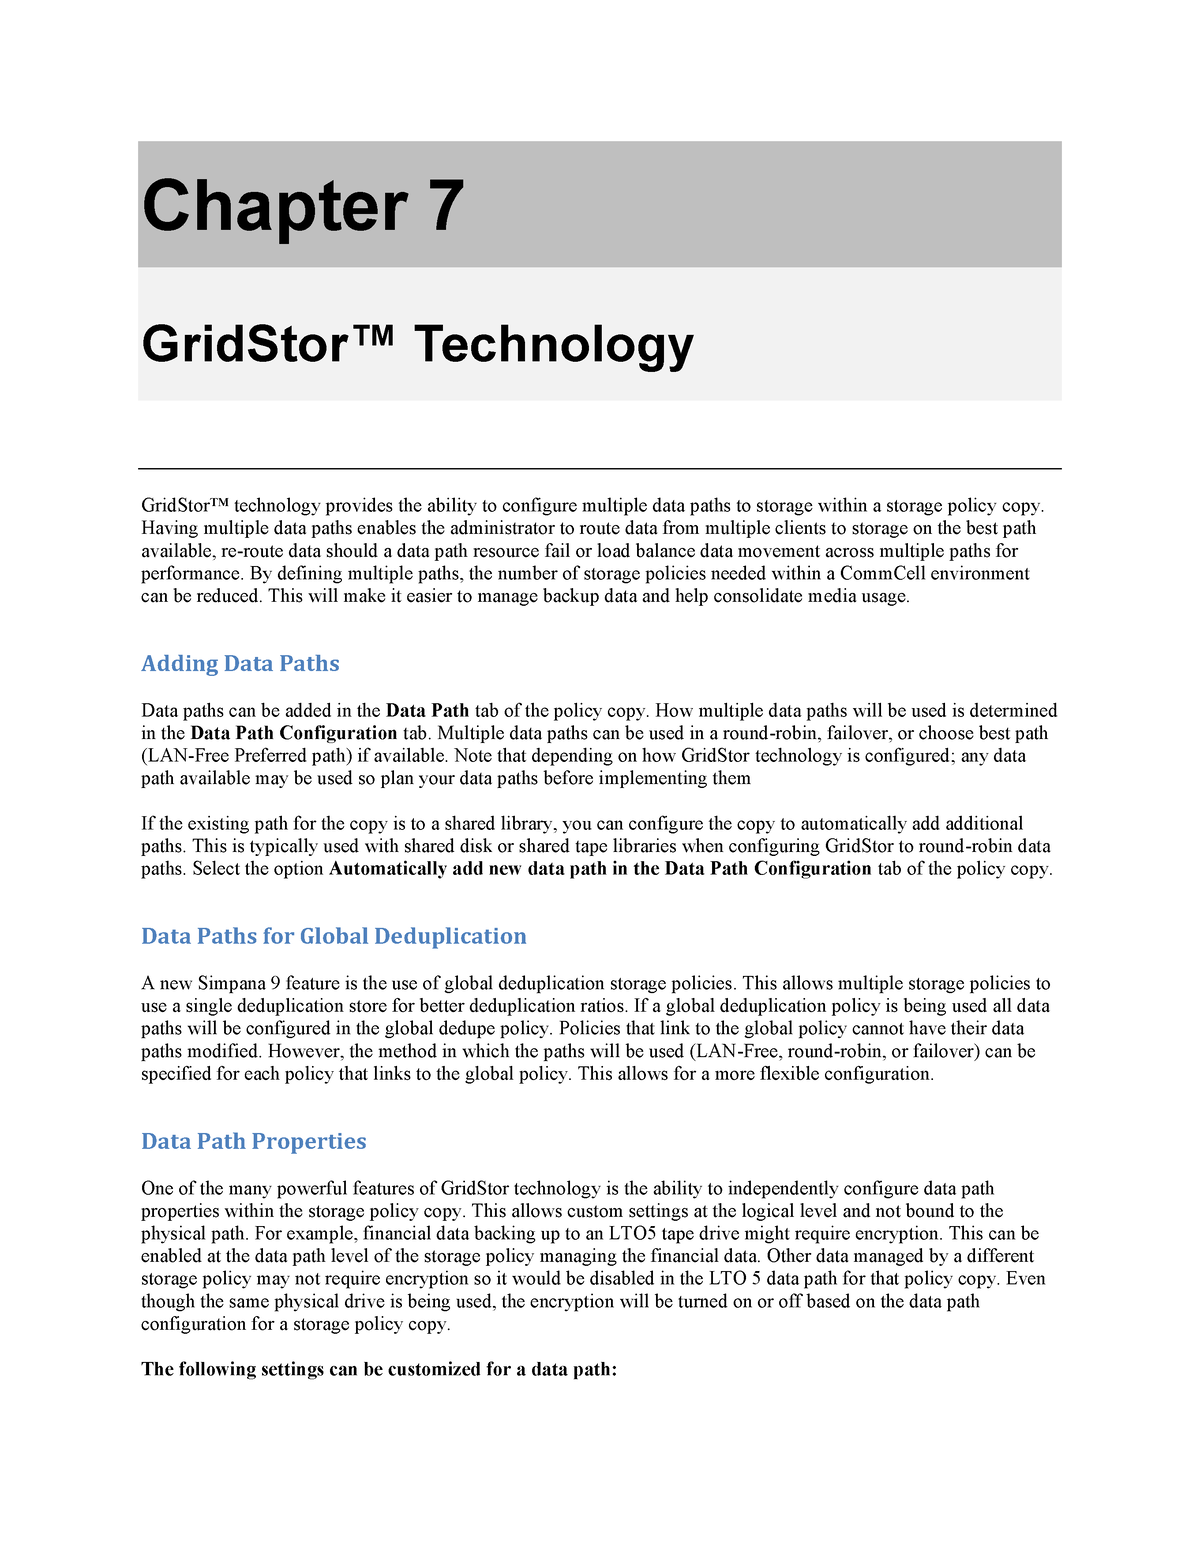 07-grid-stor-technology-chapter-7-gridstor-technology-gridstor